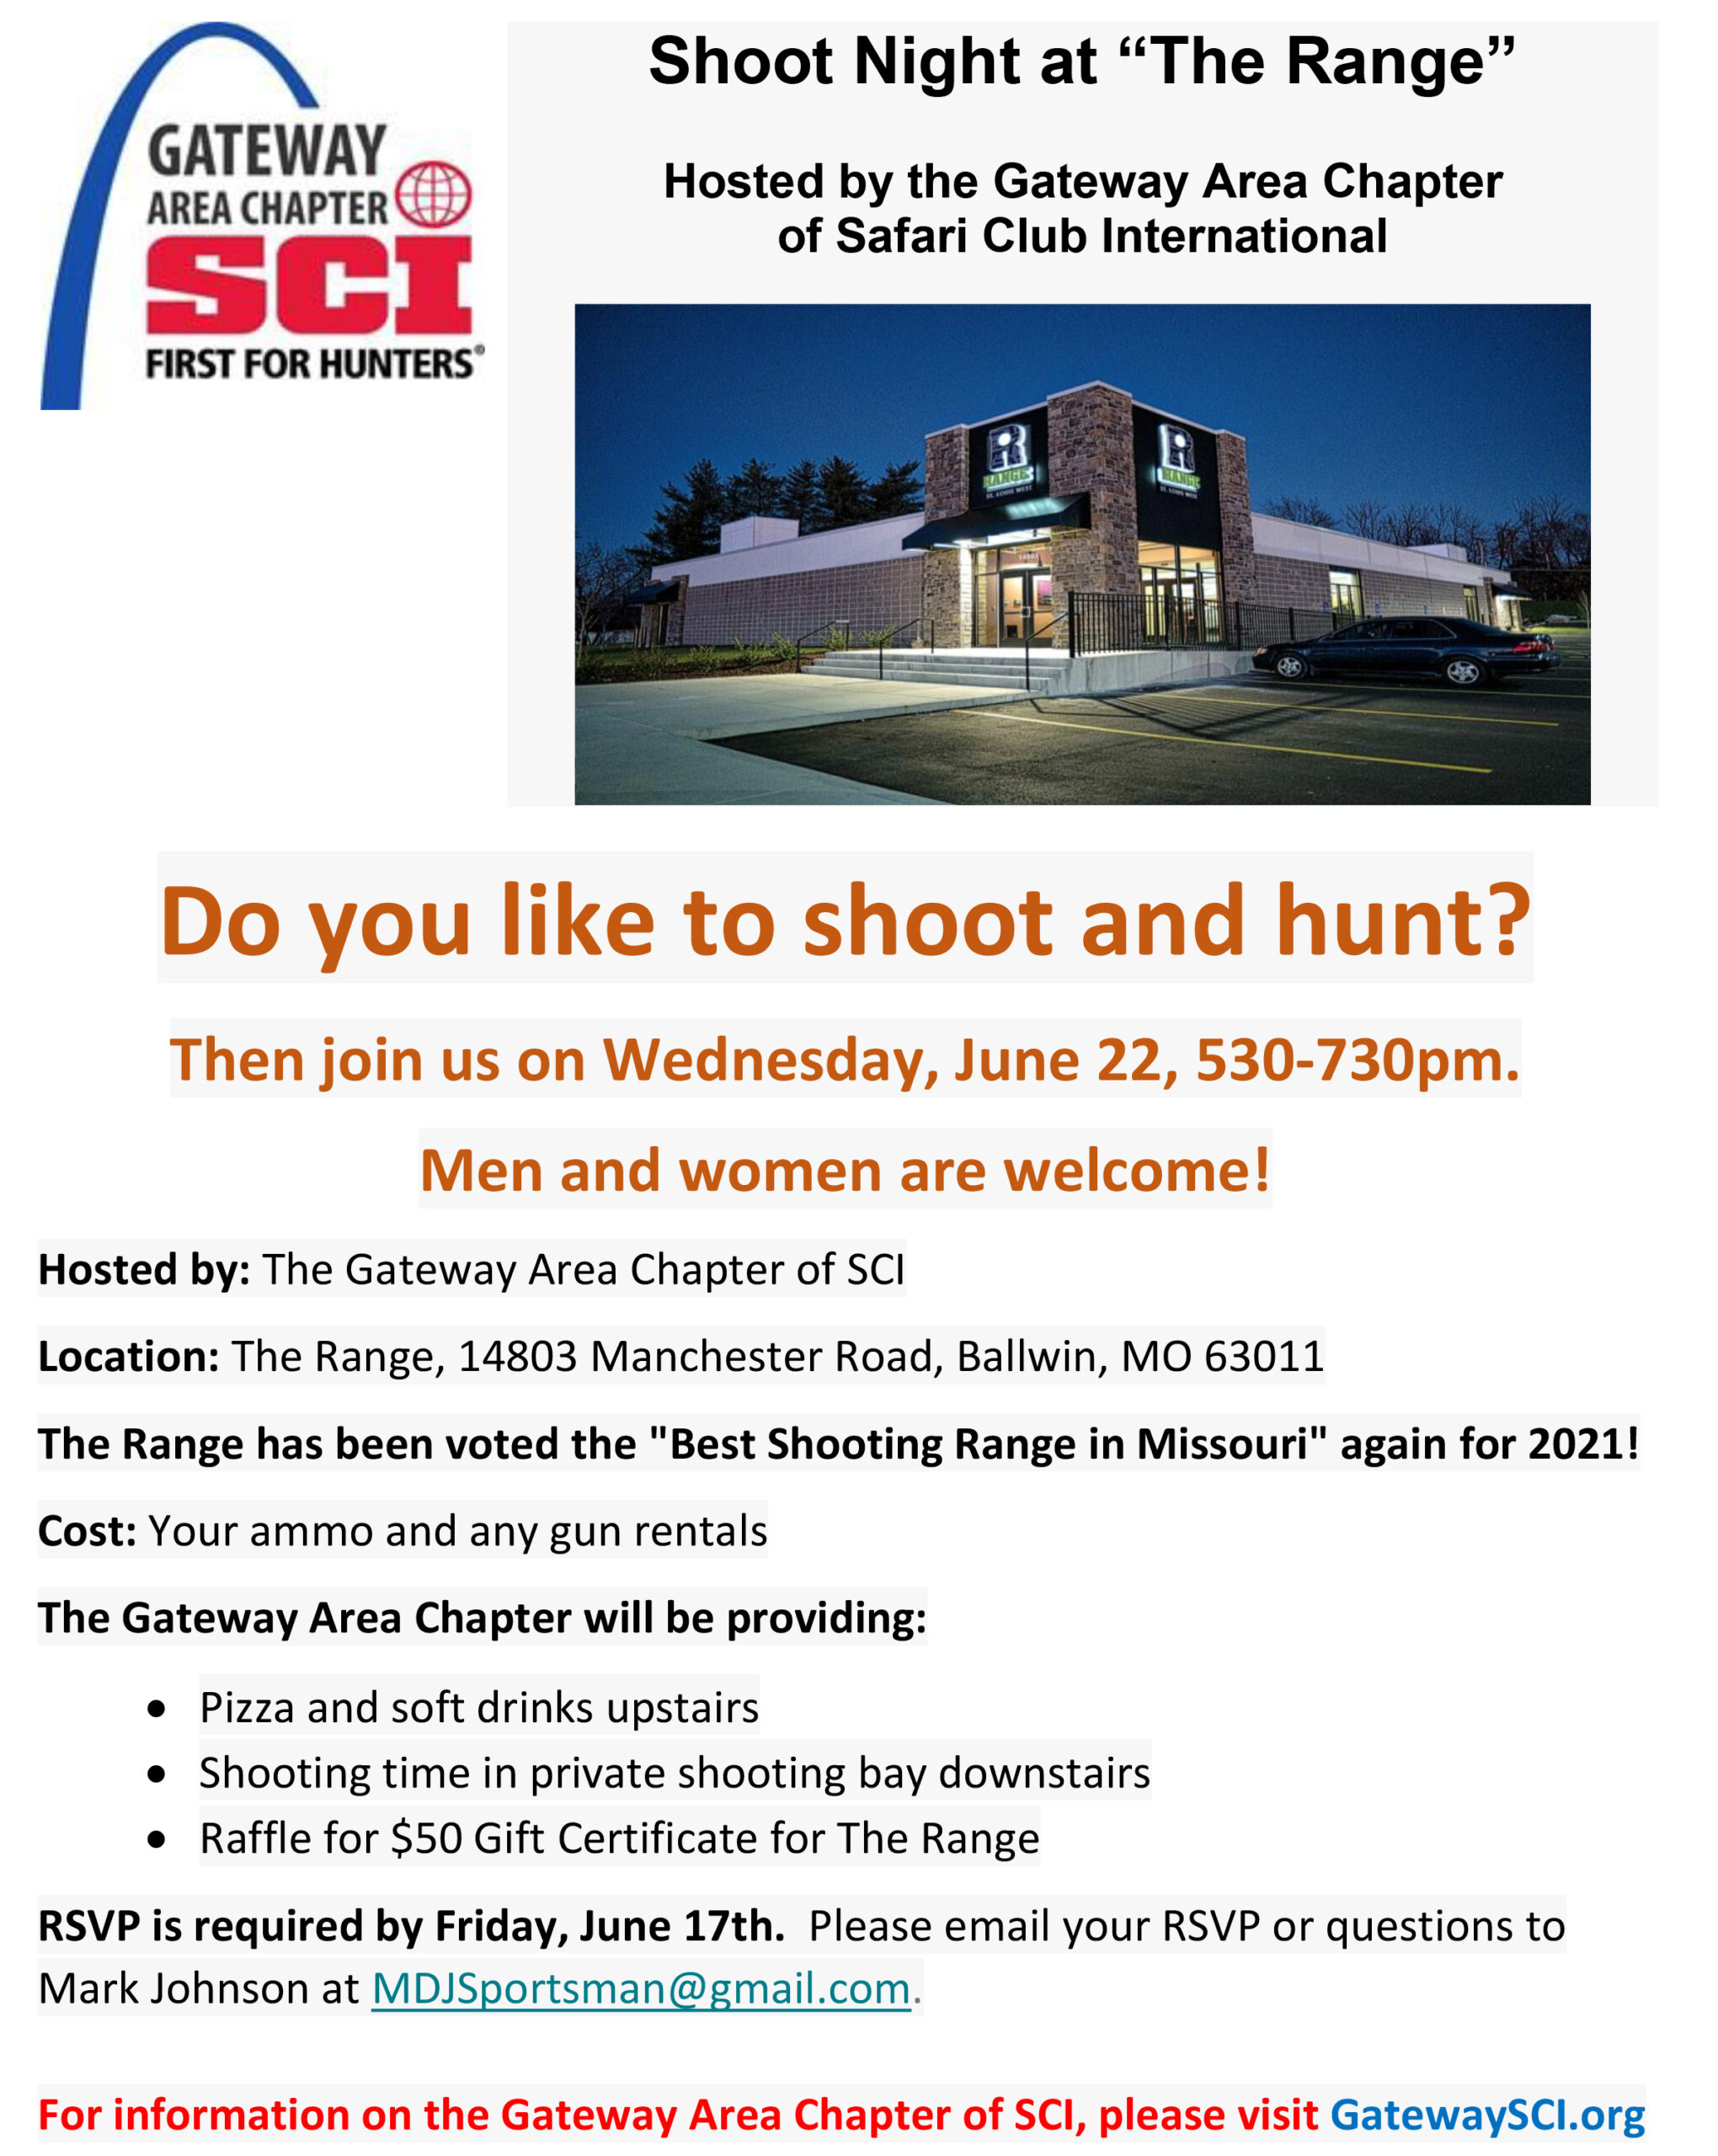 Gateway-SCI-Shoot-Night-Range-Flyer